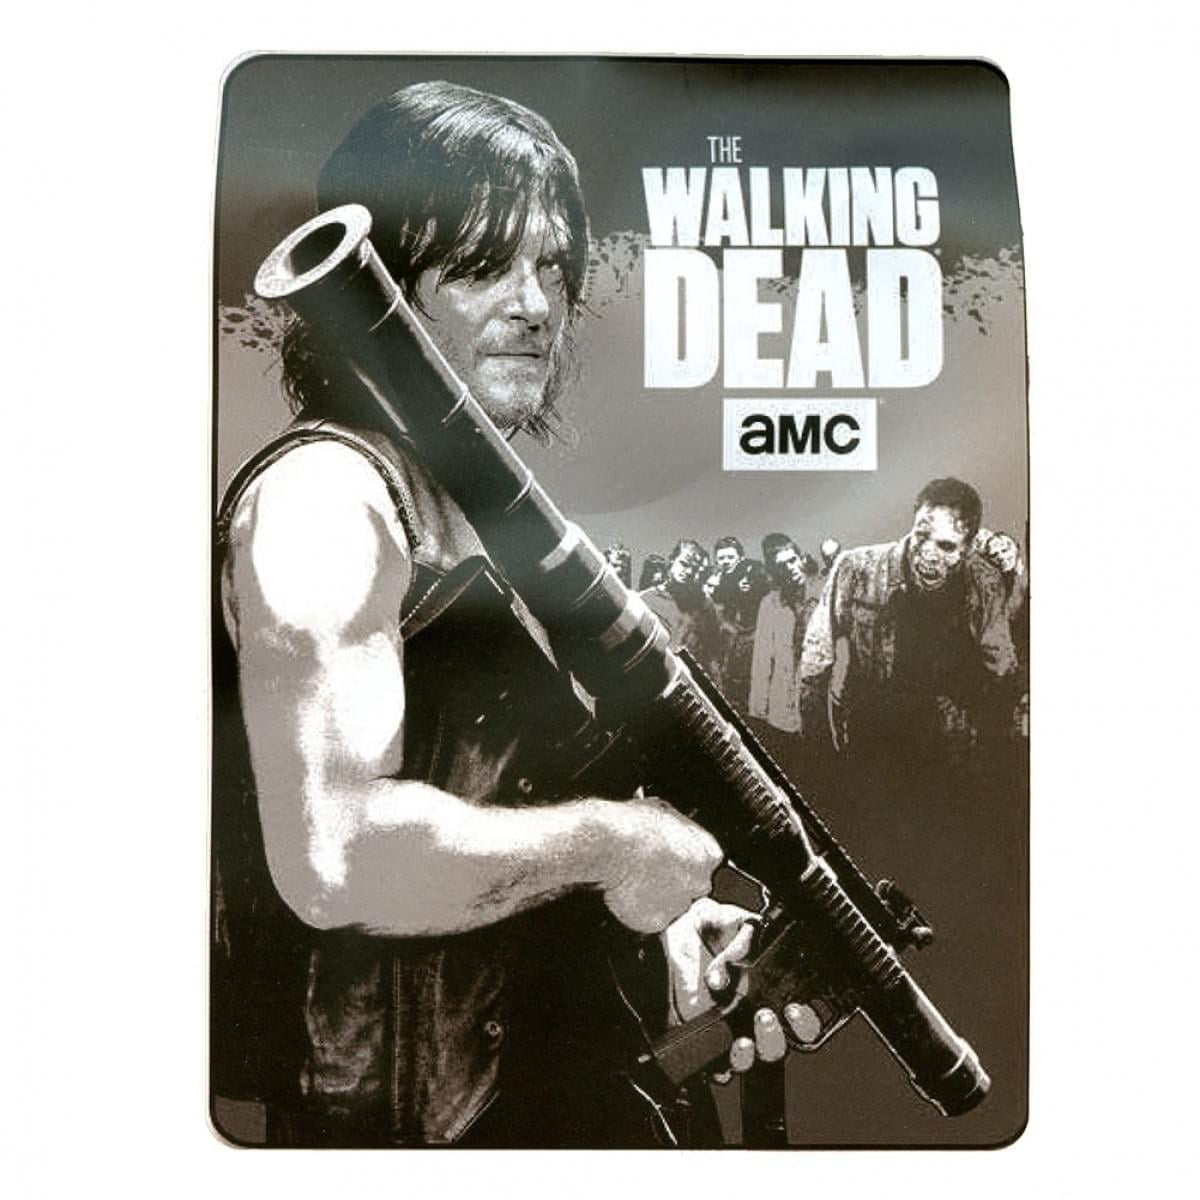 The Walking Dead Daryl With Bazooka Lightweight Fleece Blanket 45 X 60 Inches Walmartcom Walmartcom